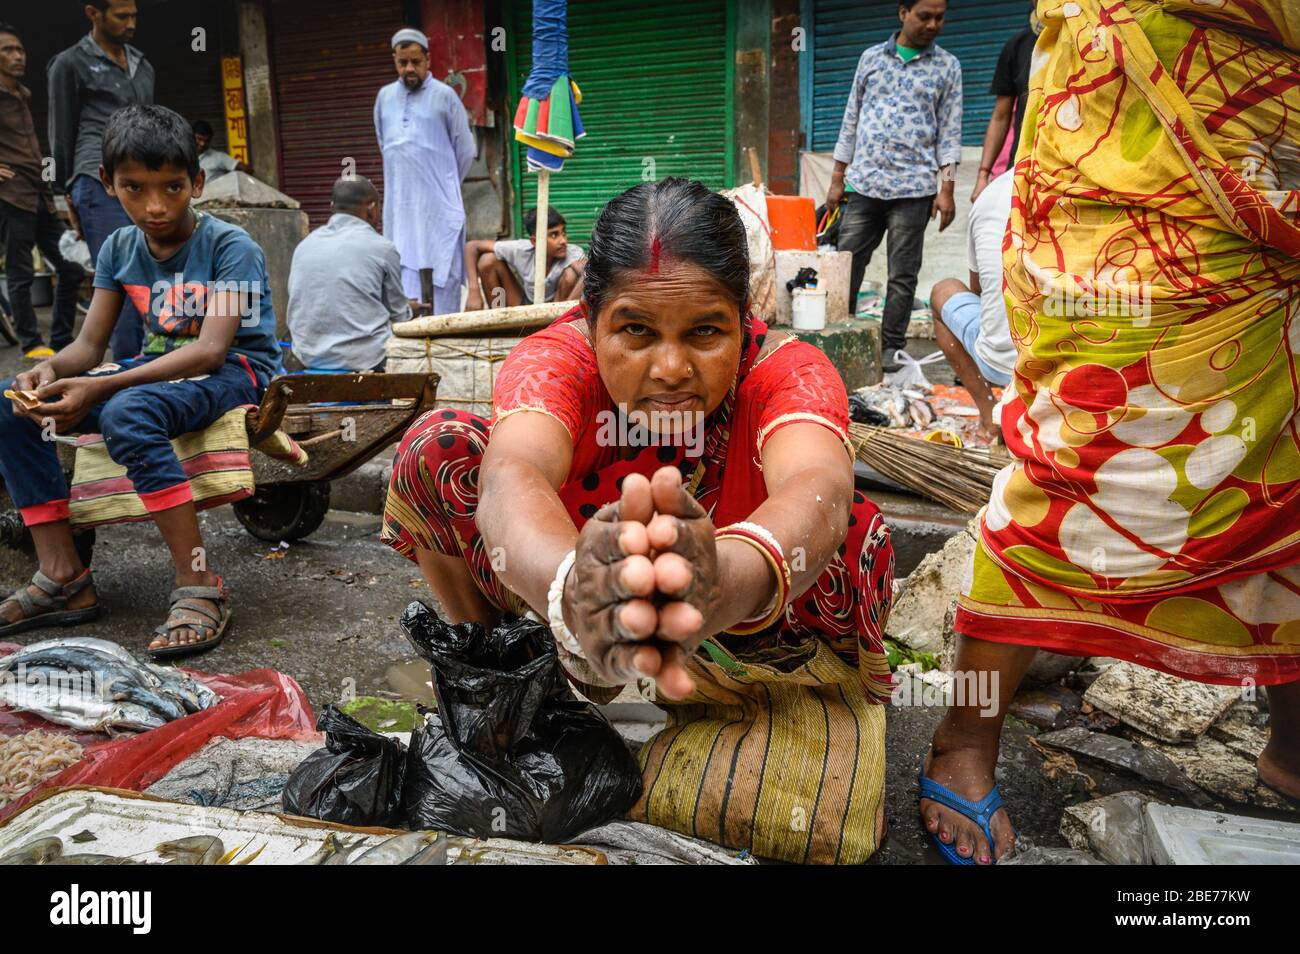 Female street vendor welcoming business, Kalkota, India Stock Photo